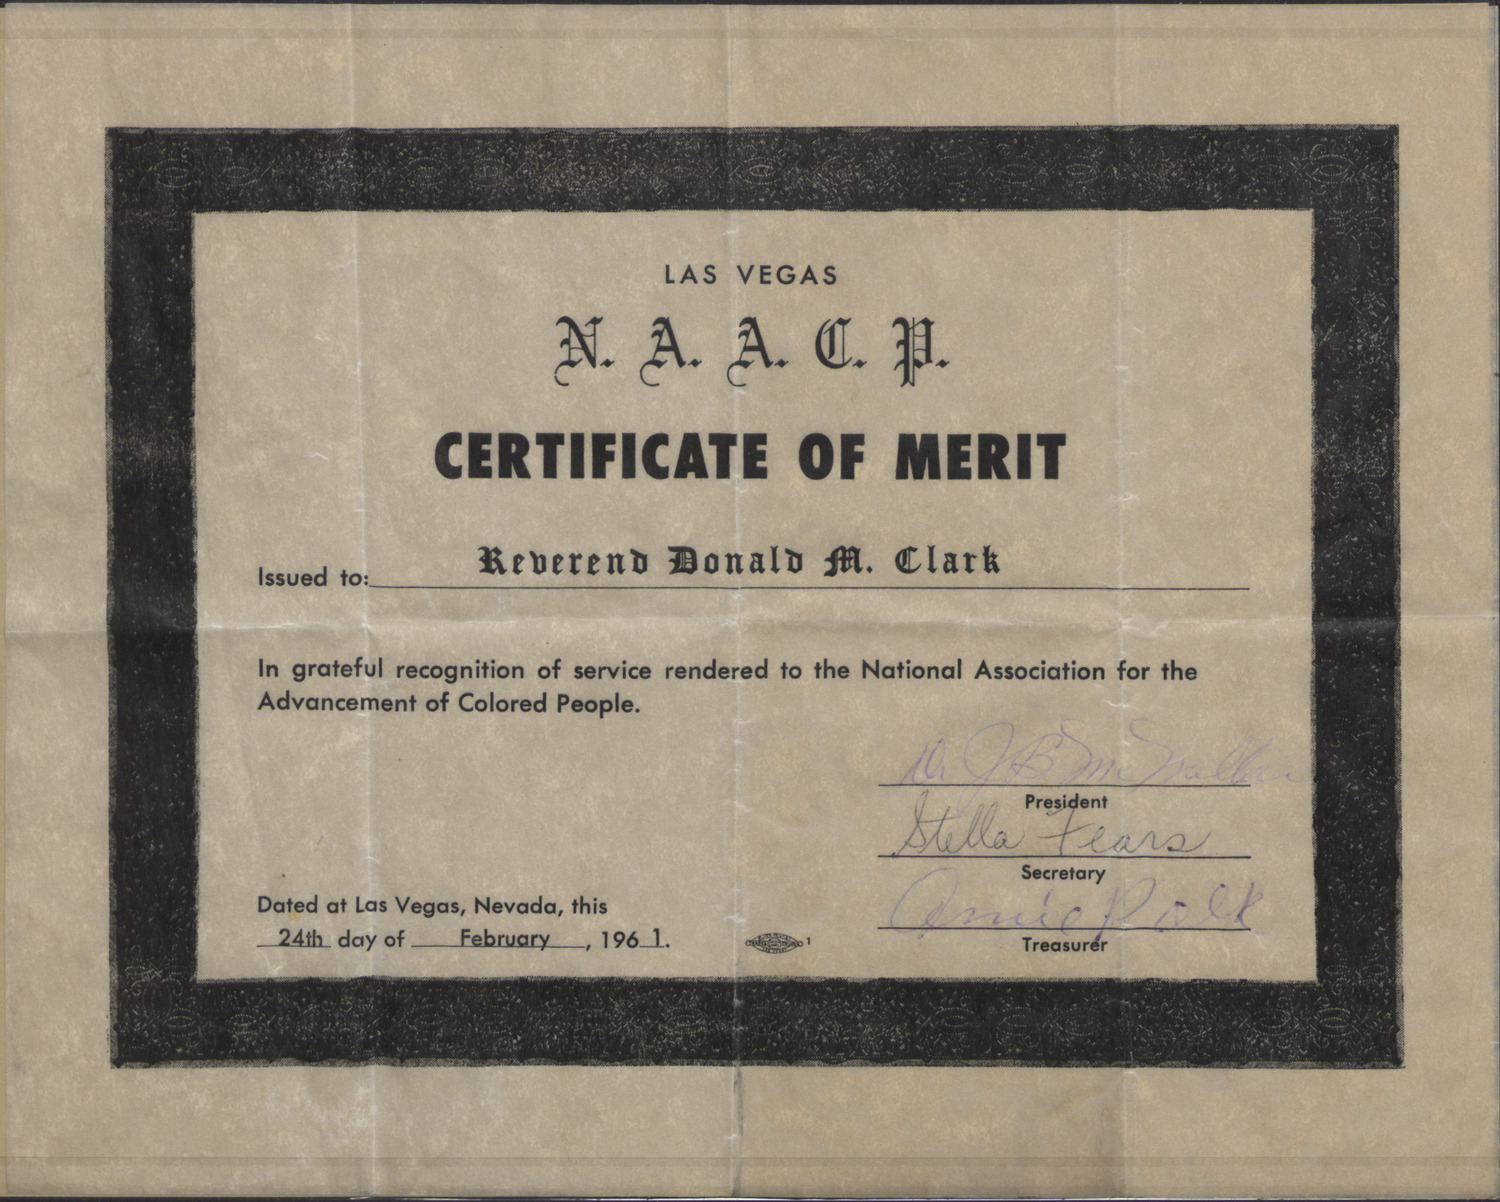 Certificate of Merit issued to Rev. Donald M. Clark on February 24, 1961